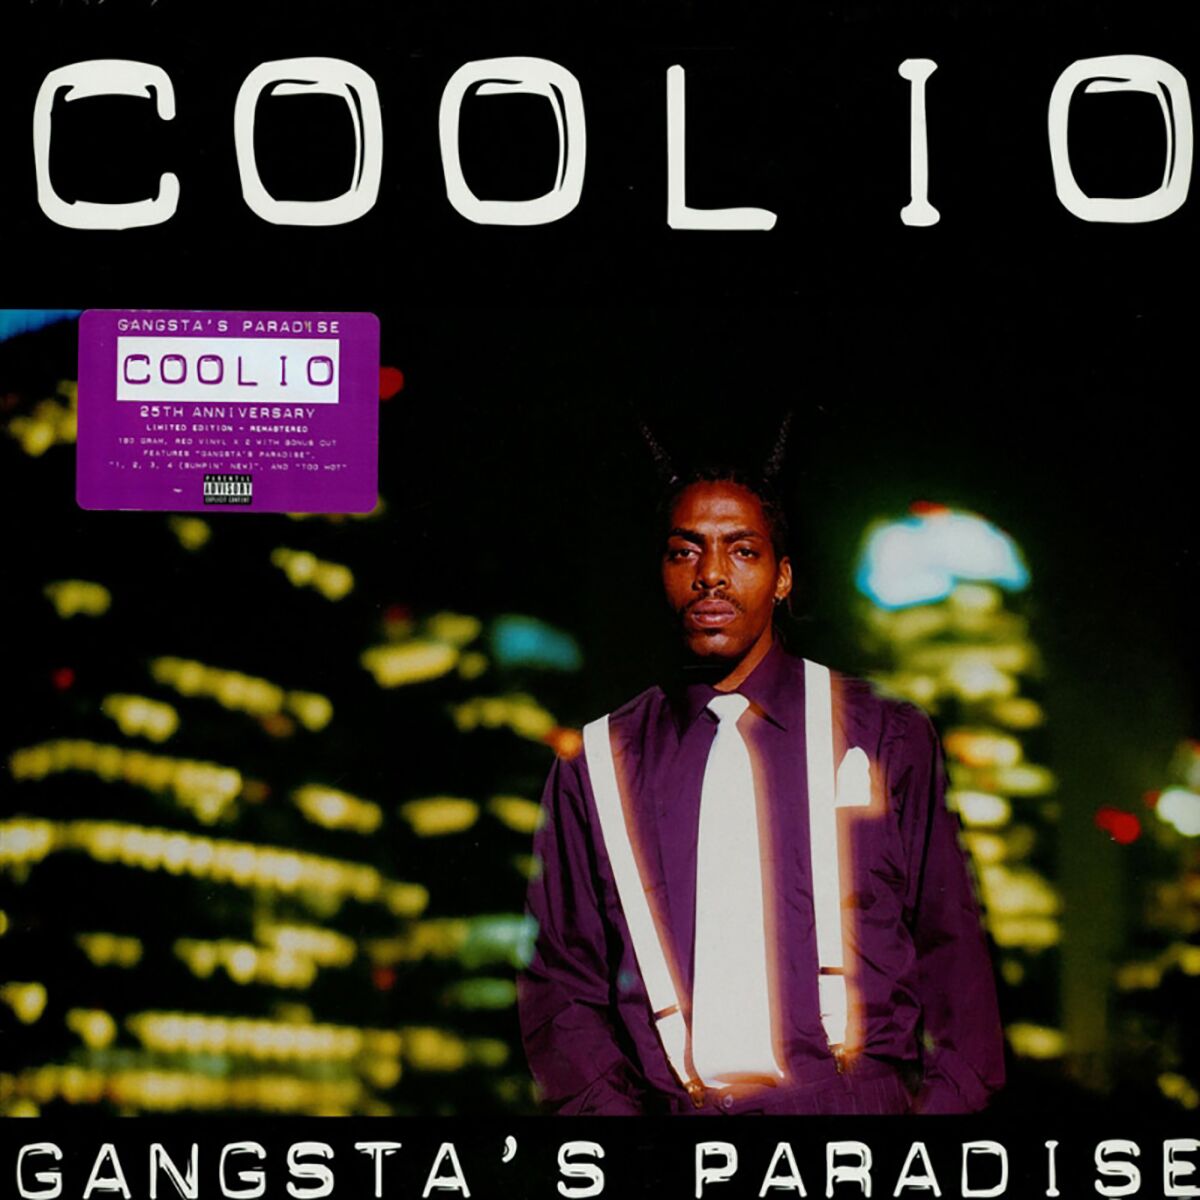 Gangsta s mp3. Coolio Gangsta's Paradise 25th Anniversary. Coolio Gangsta's Paradise исполнители. Coolio - Gangsta's Paradise (1995). Gangsta’s Paradise Кулио.